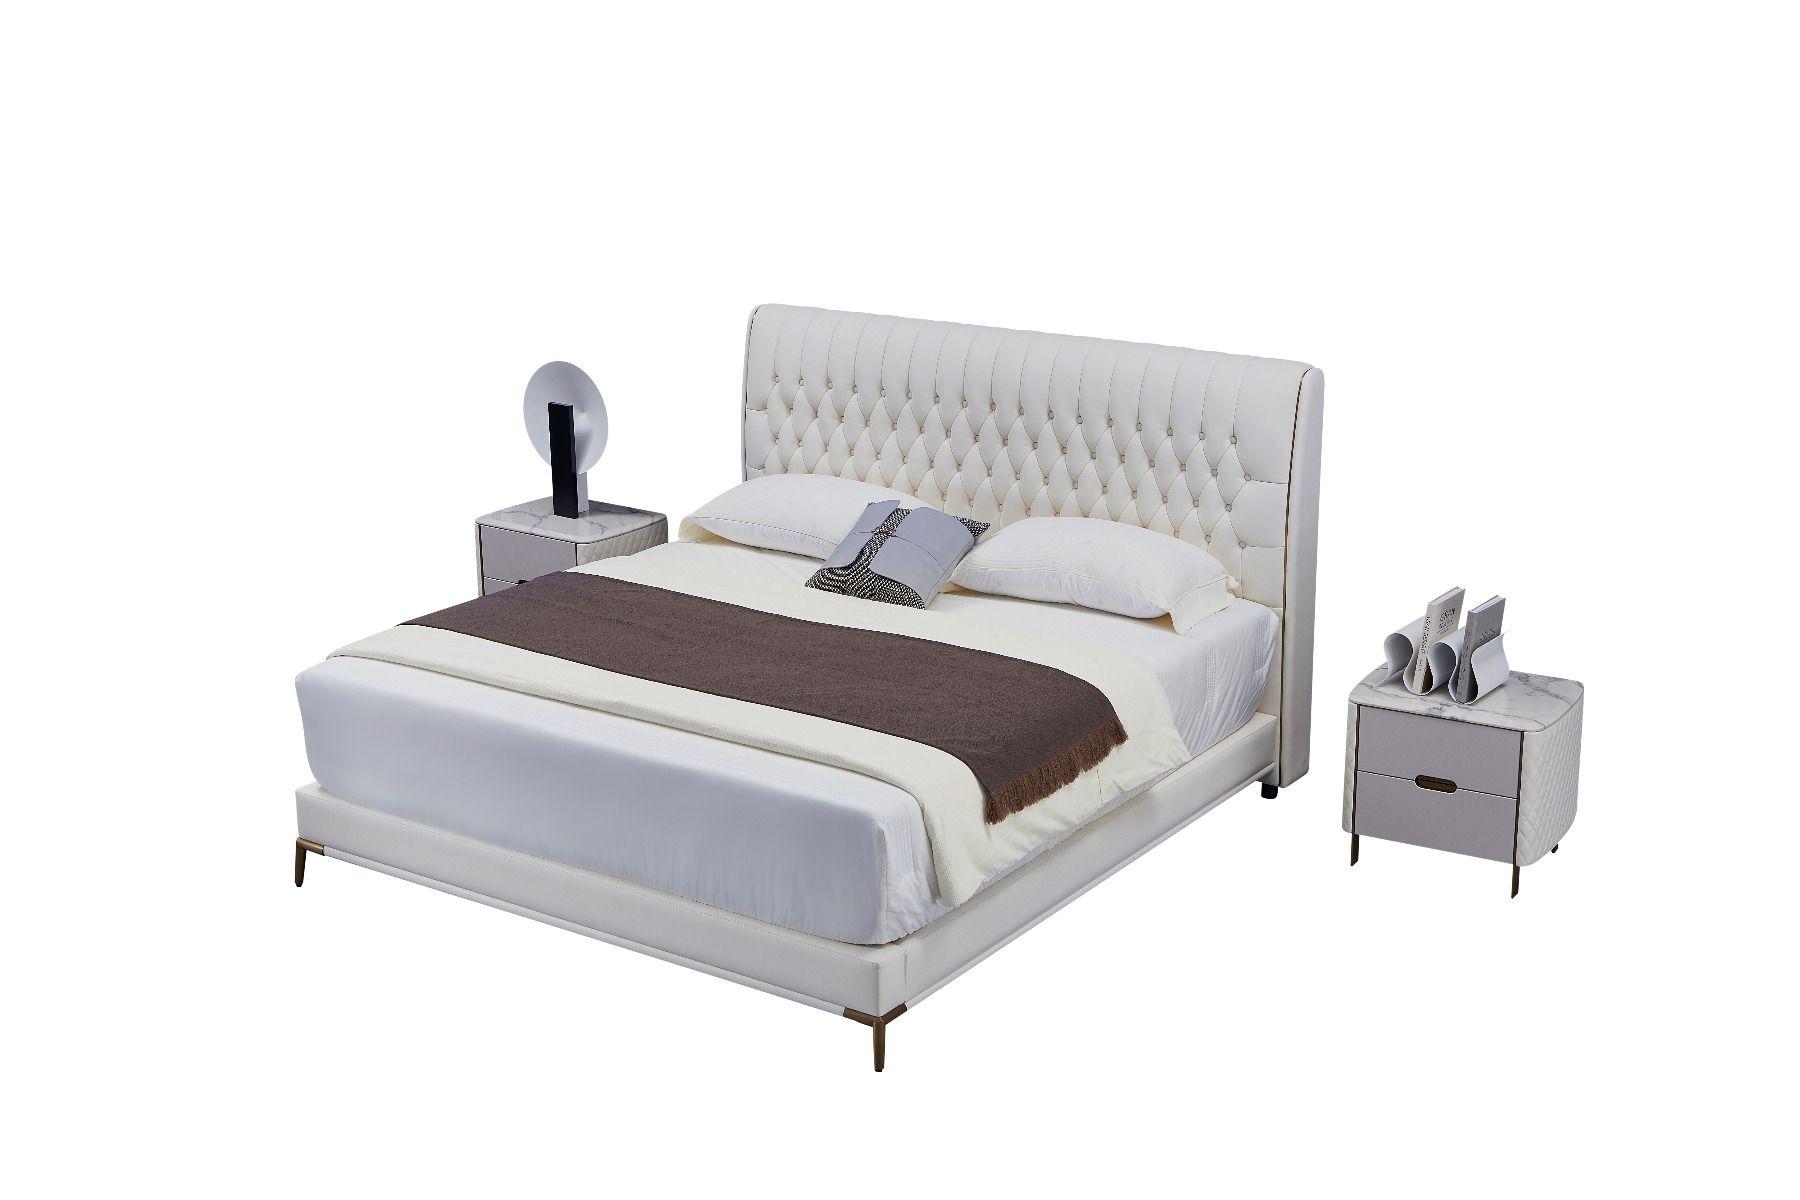 

    
American Eagle Furniture B-Y2011-CK Platform Bed Gray B-Y2011-CK
